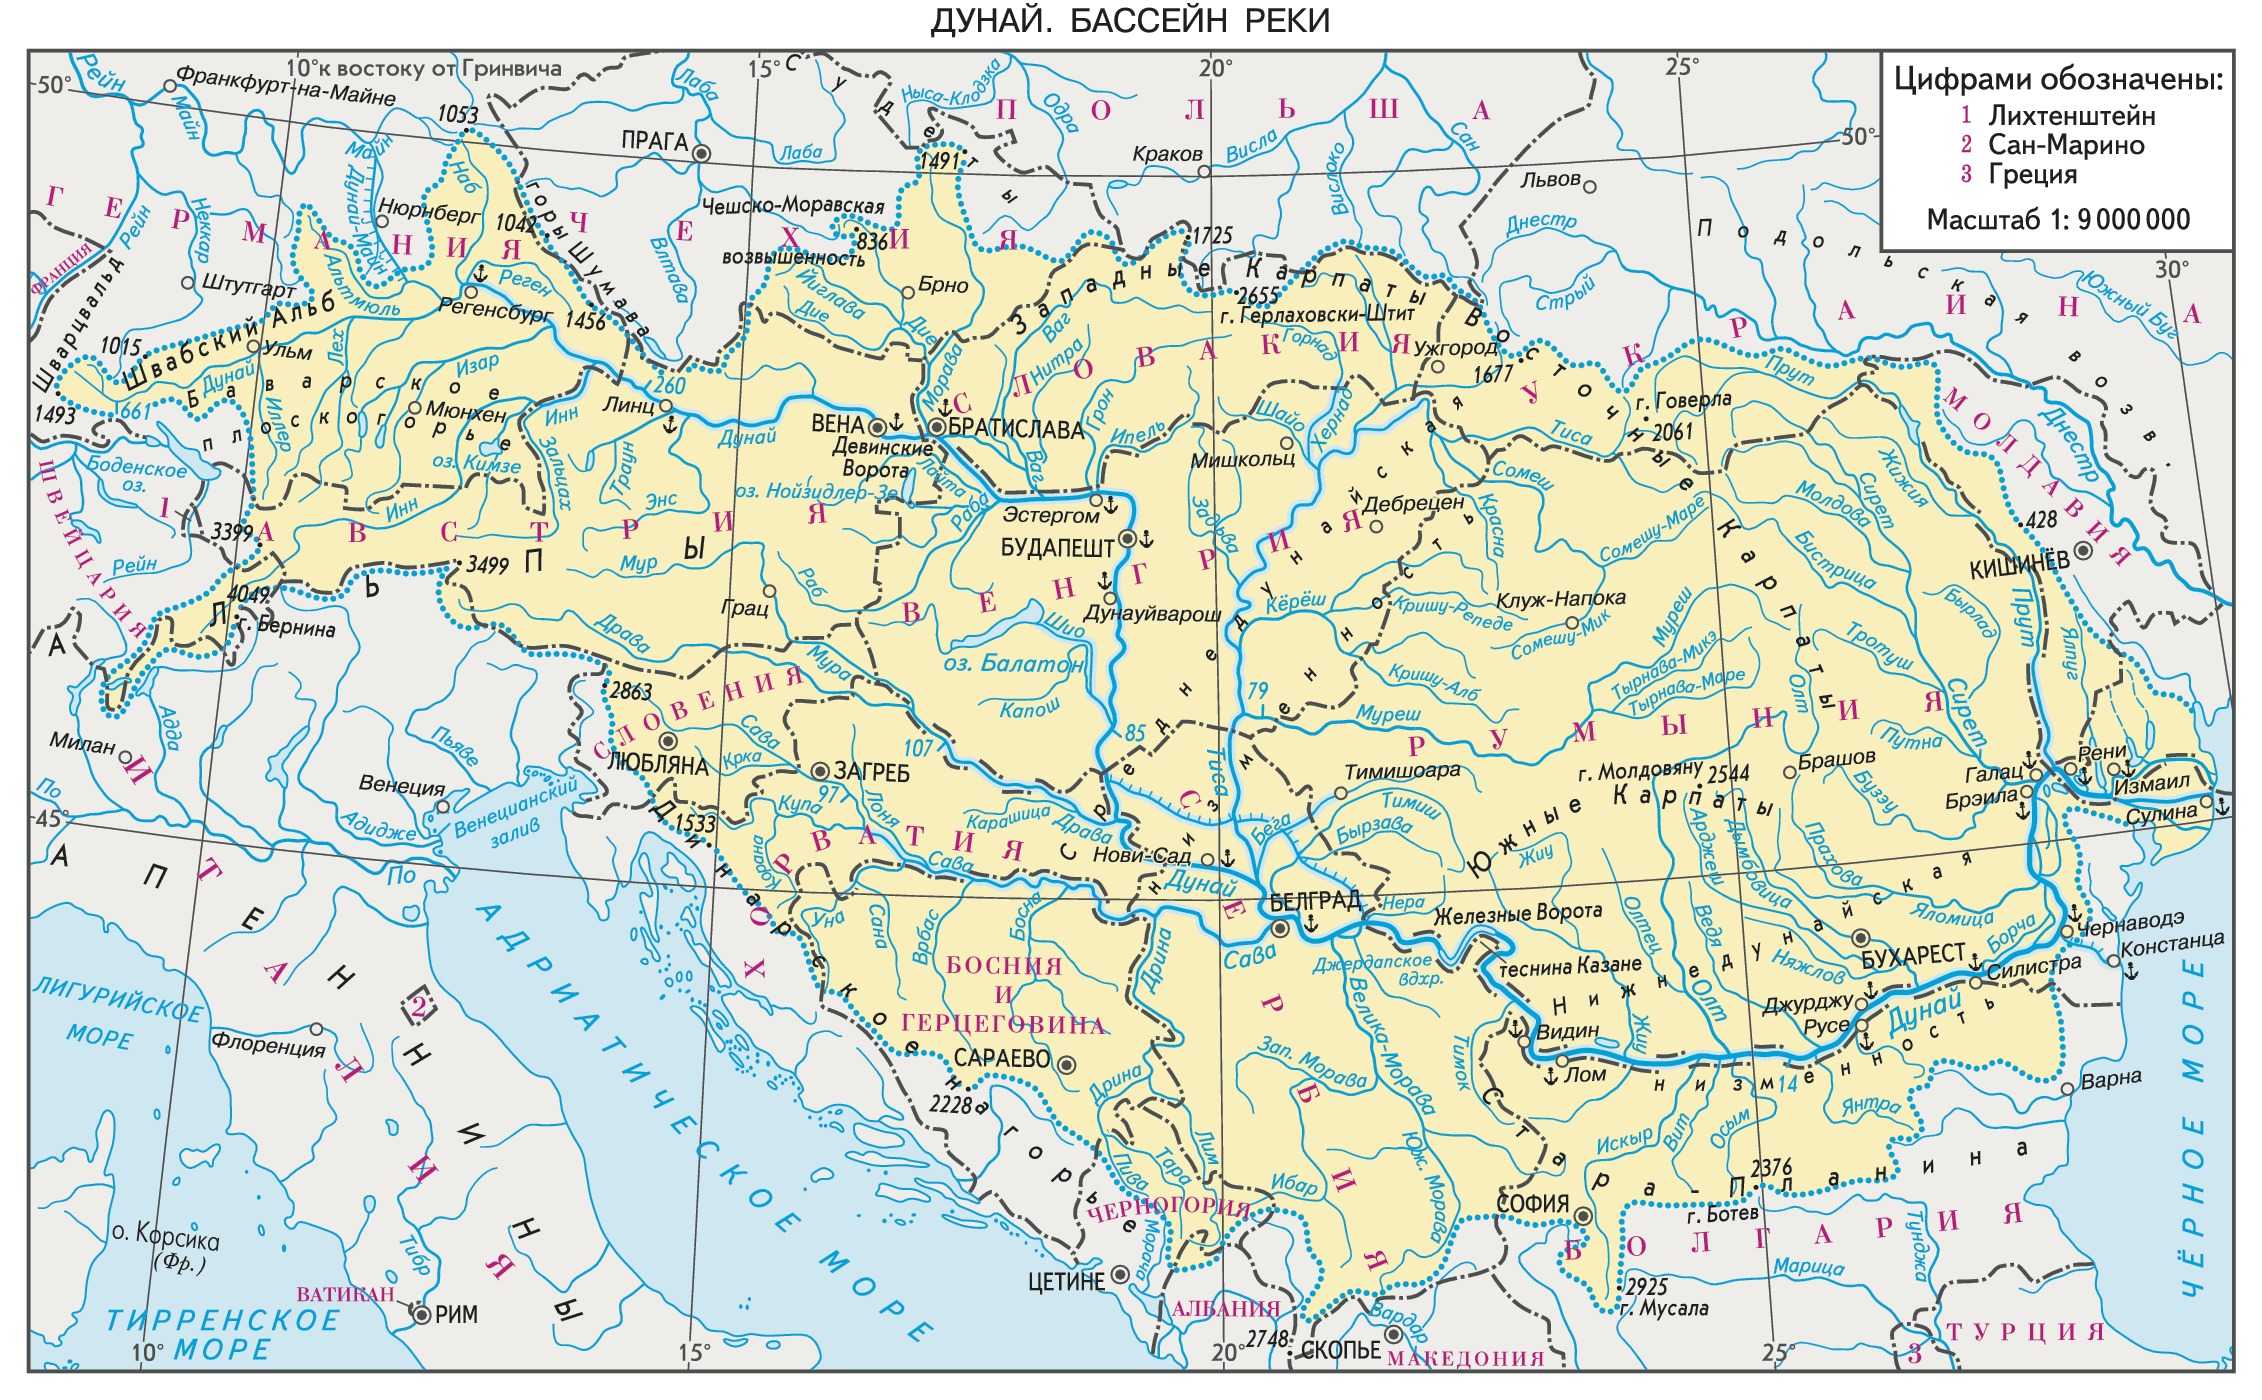 Прав приток дунай. Бассейн реки Дунай на карте. Река Дунай на карте. Бассейн реки Дунай на карте Европы. Река Дунай на карте Европы на русском языке.